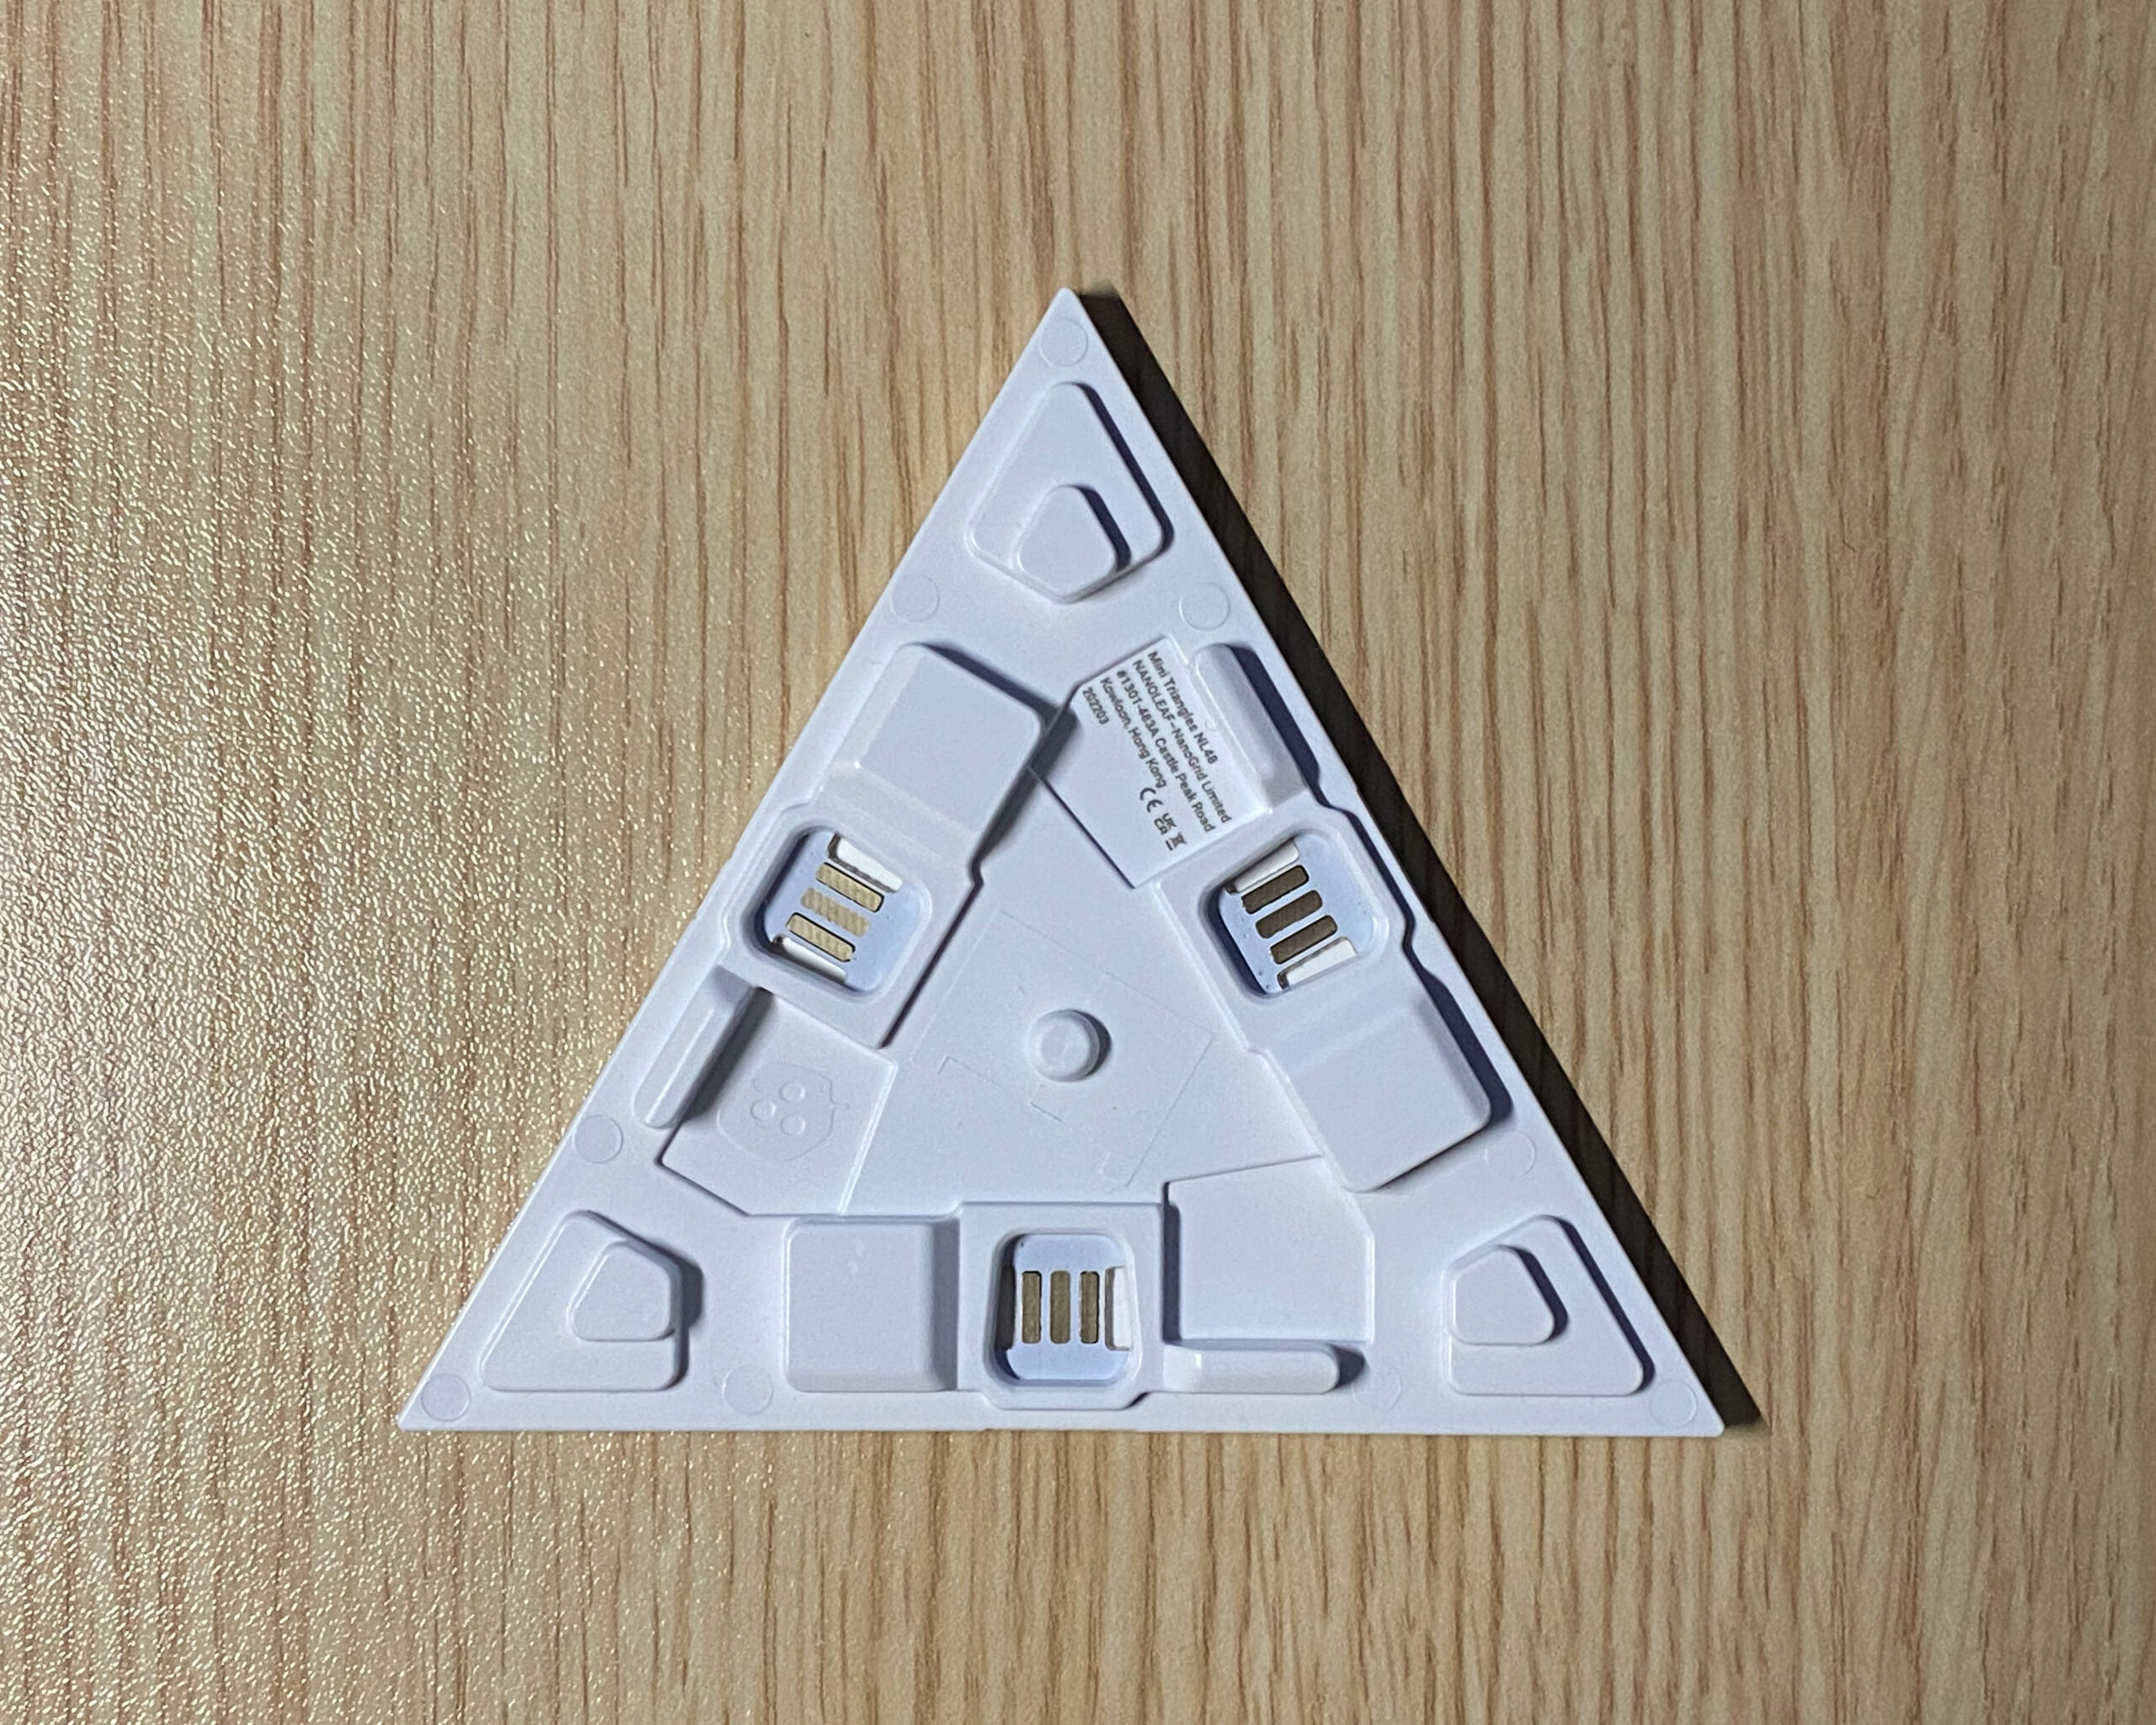 Nanoleaf Shapes Mini triangle